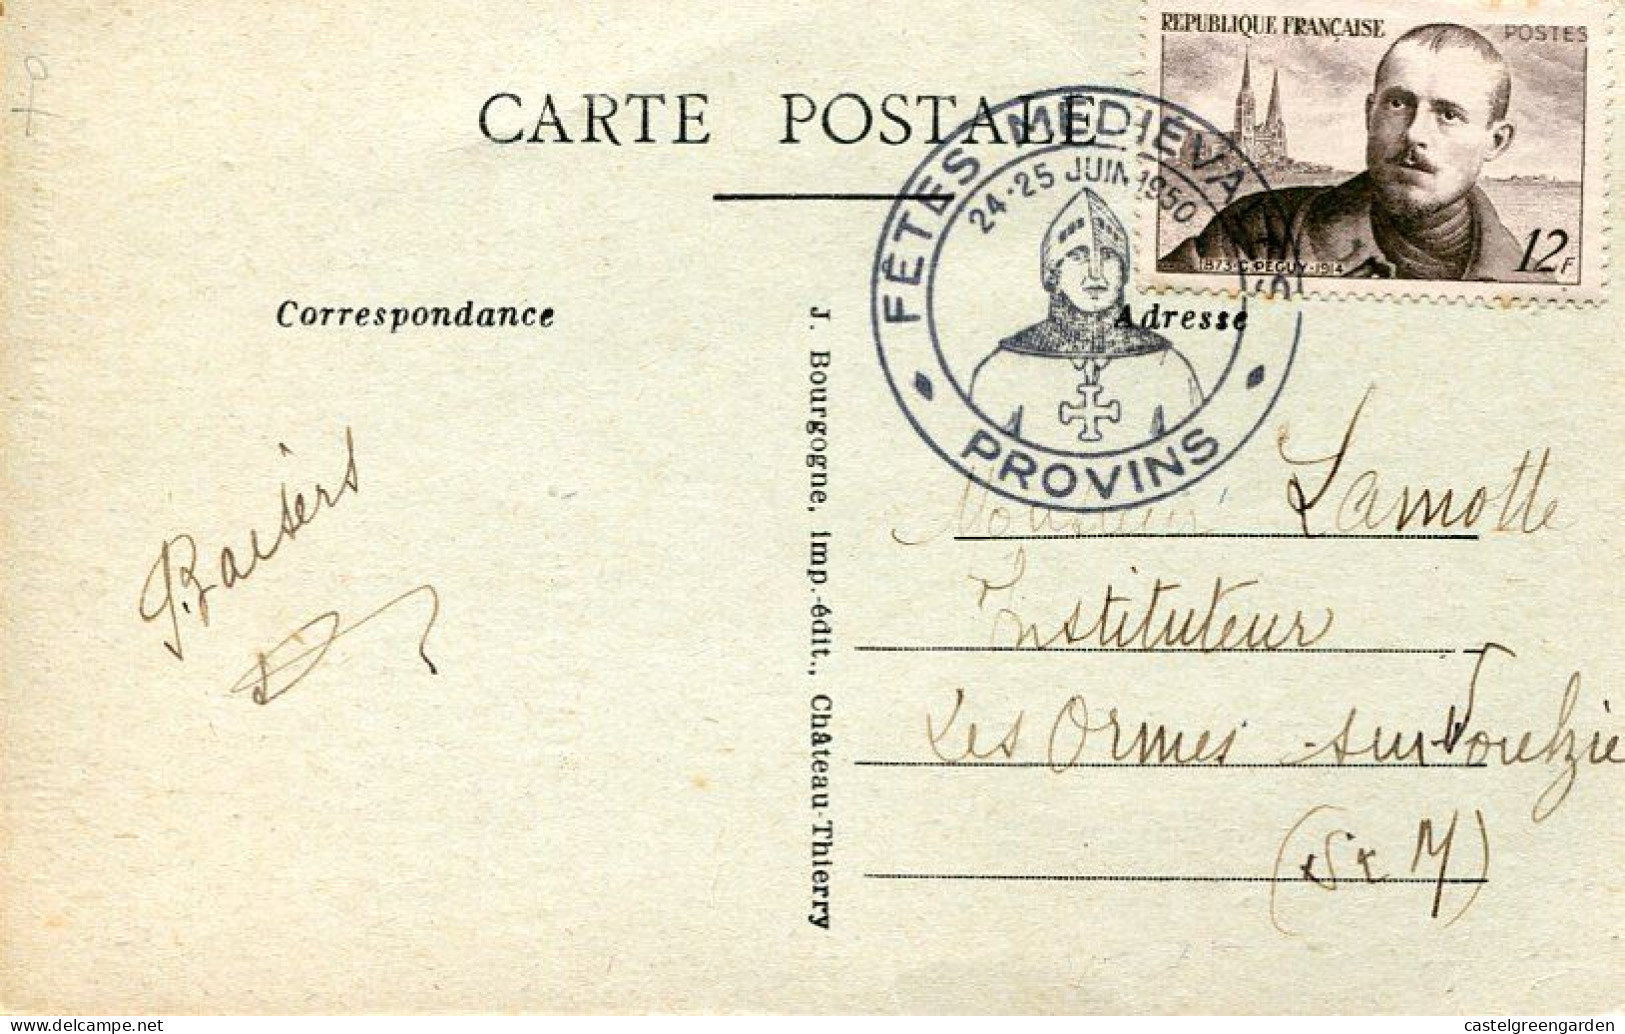 X0563 France,special Postmark Provins 1950 Fetes Medievales,medieval Festivals,mittelalterliche Feste - Lettres & Documents